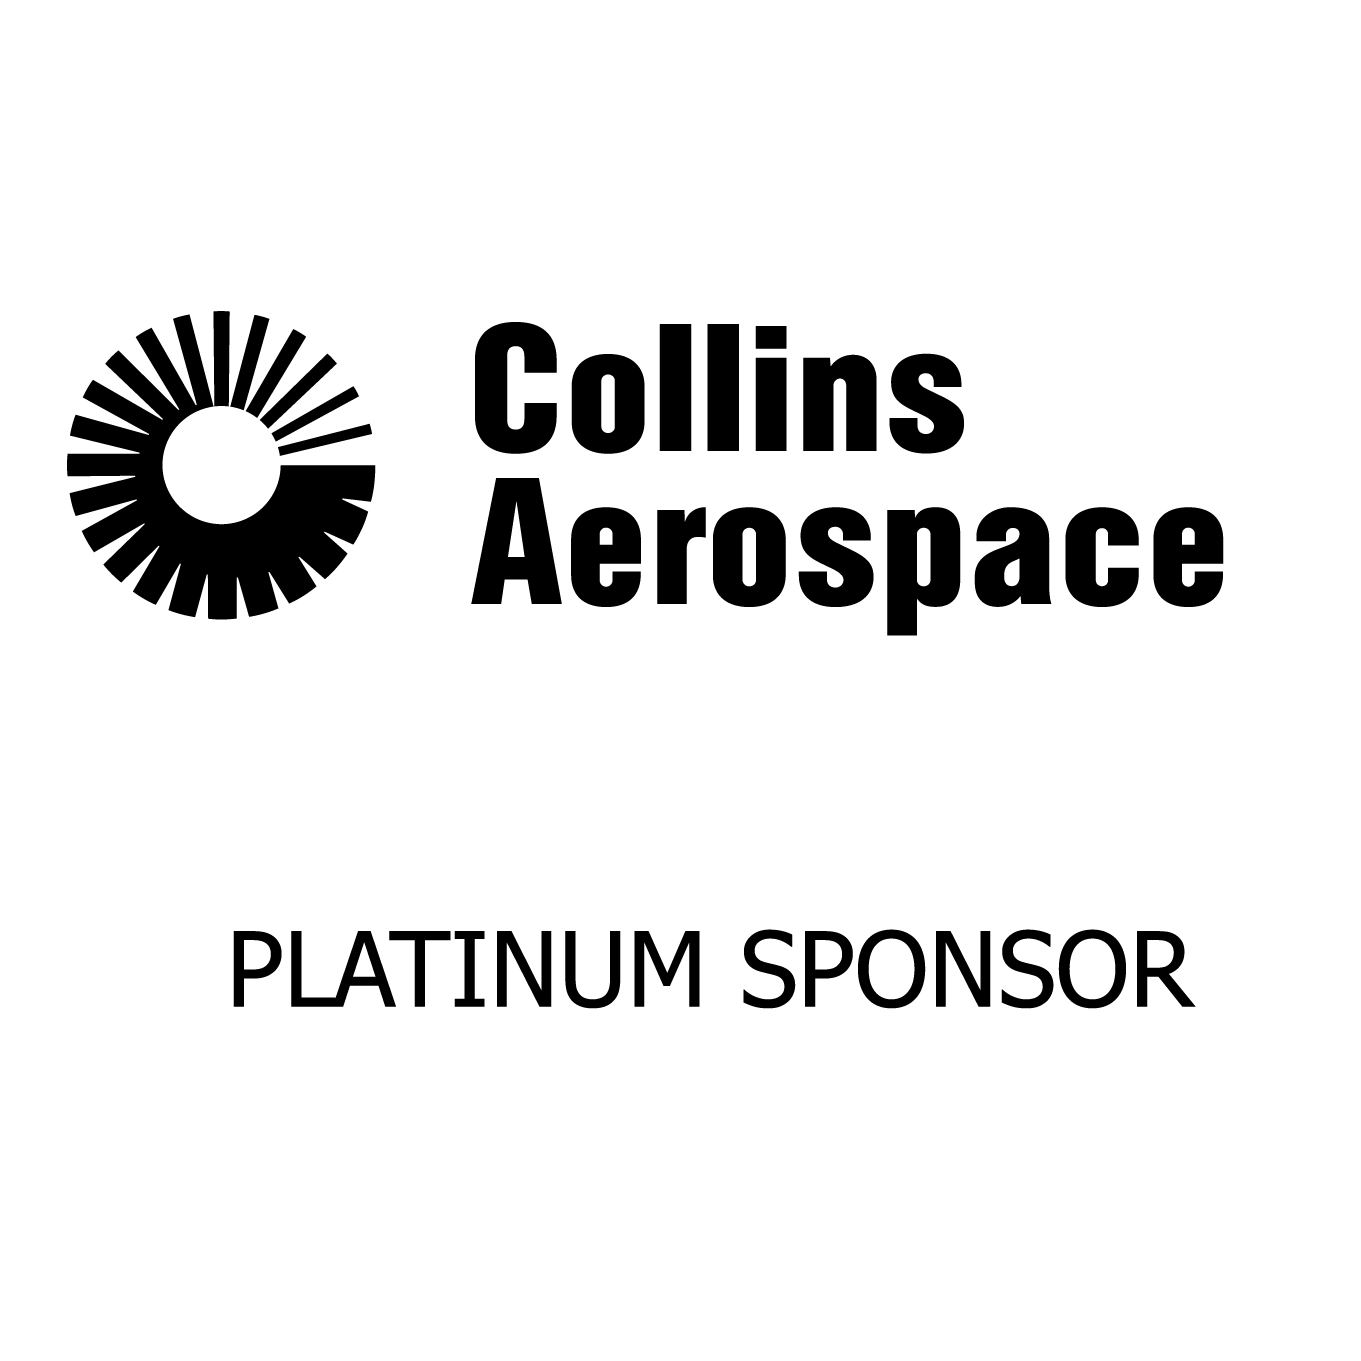 Collins_Aerospace@2x